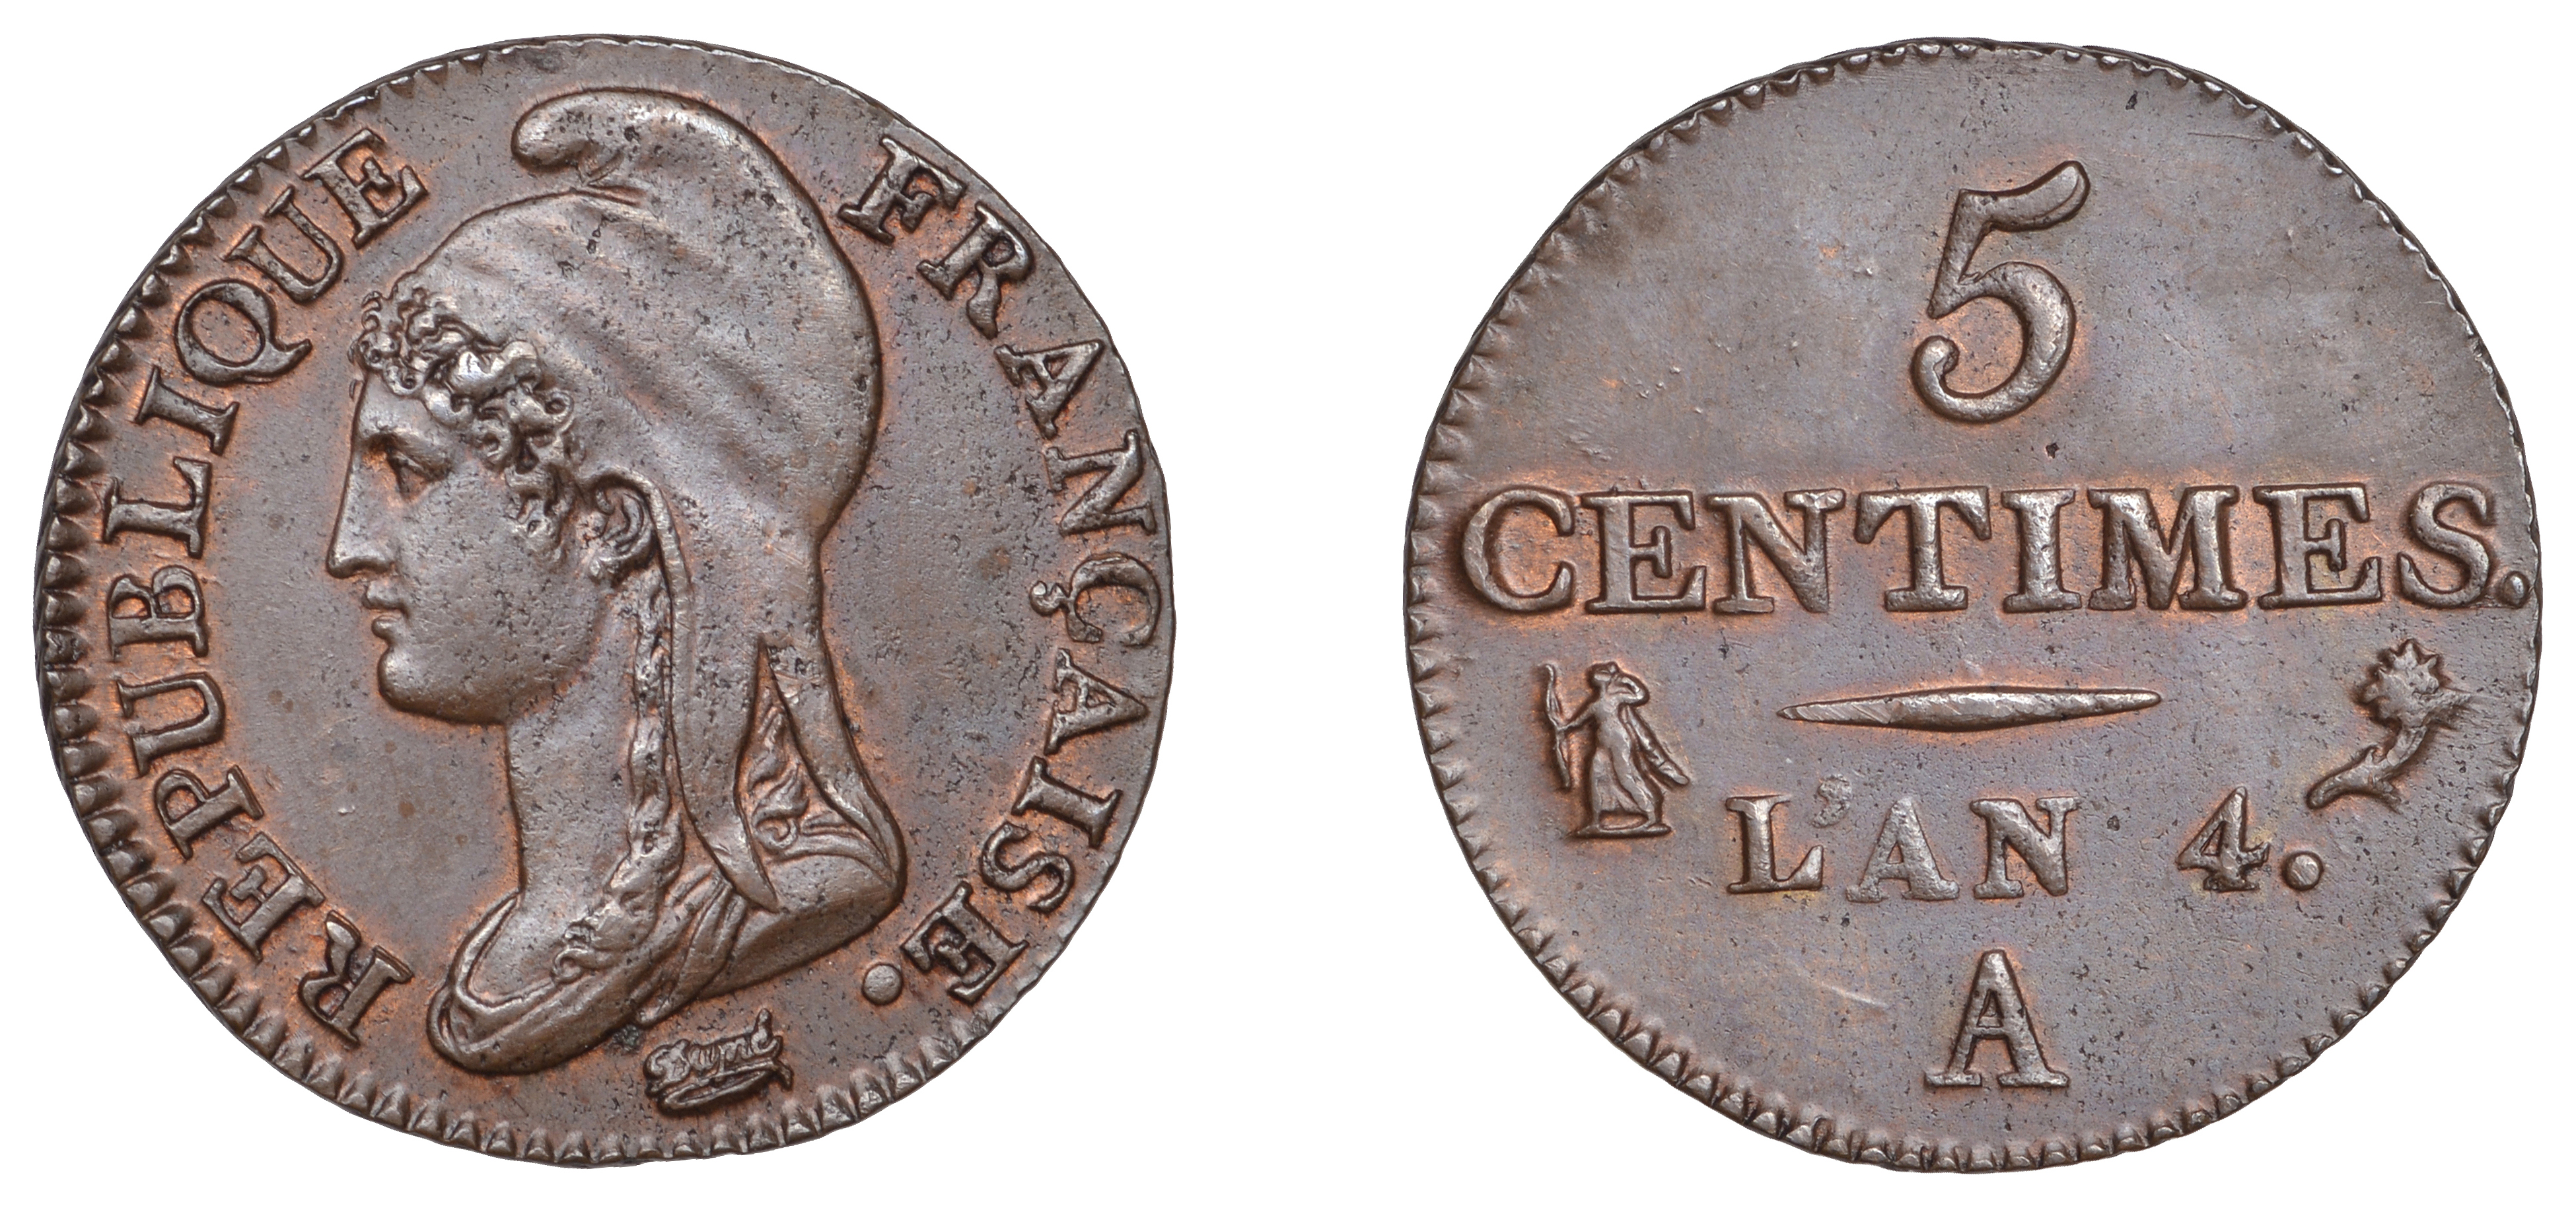 France, Directory (1795-1799), 5 Centimes, AN 4a, Paris, 5.08g/6h (Gad. 124; KM 635.1). Extr...